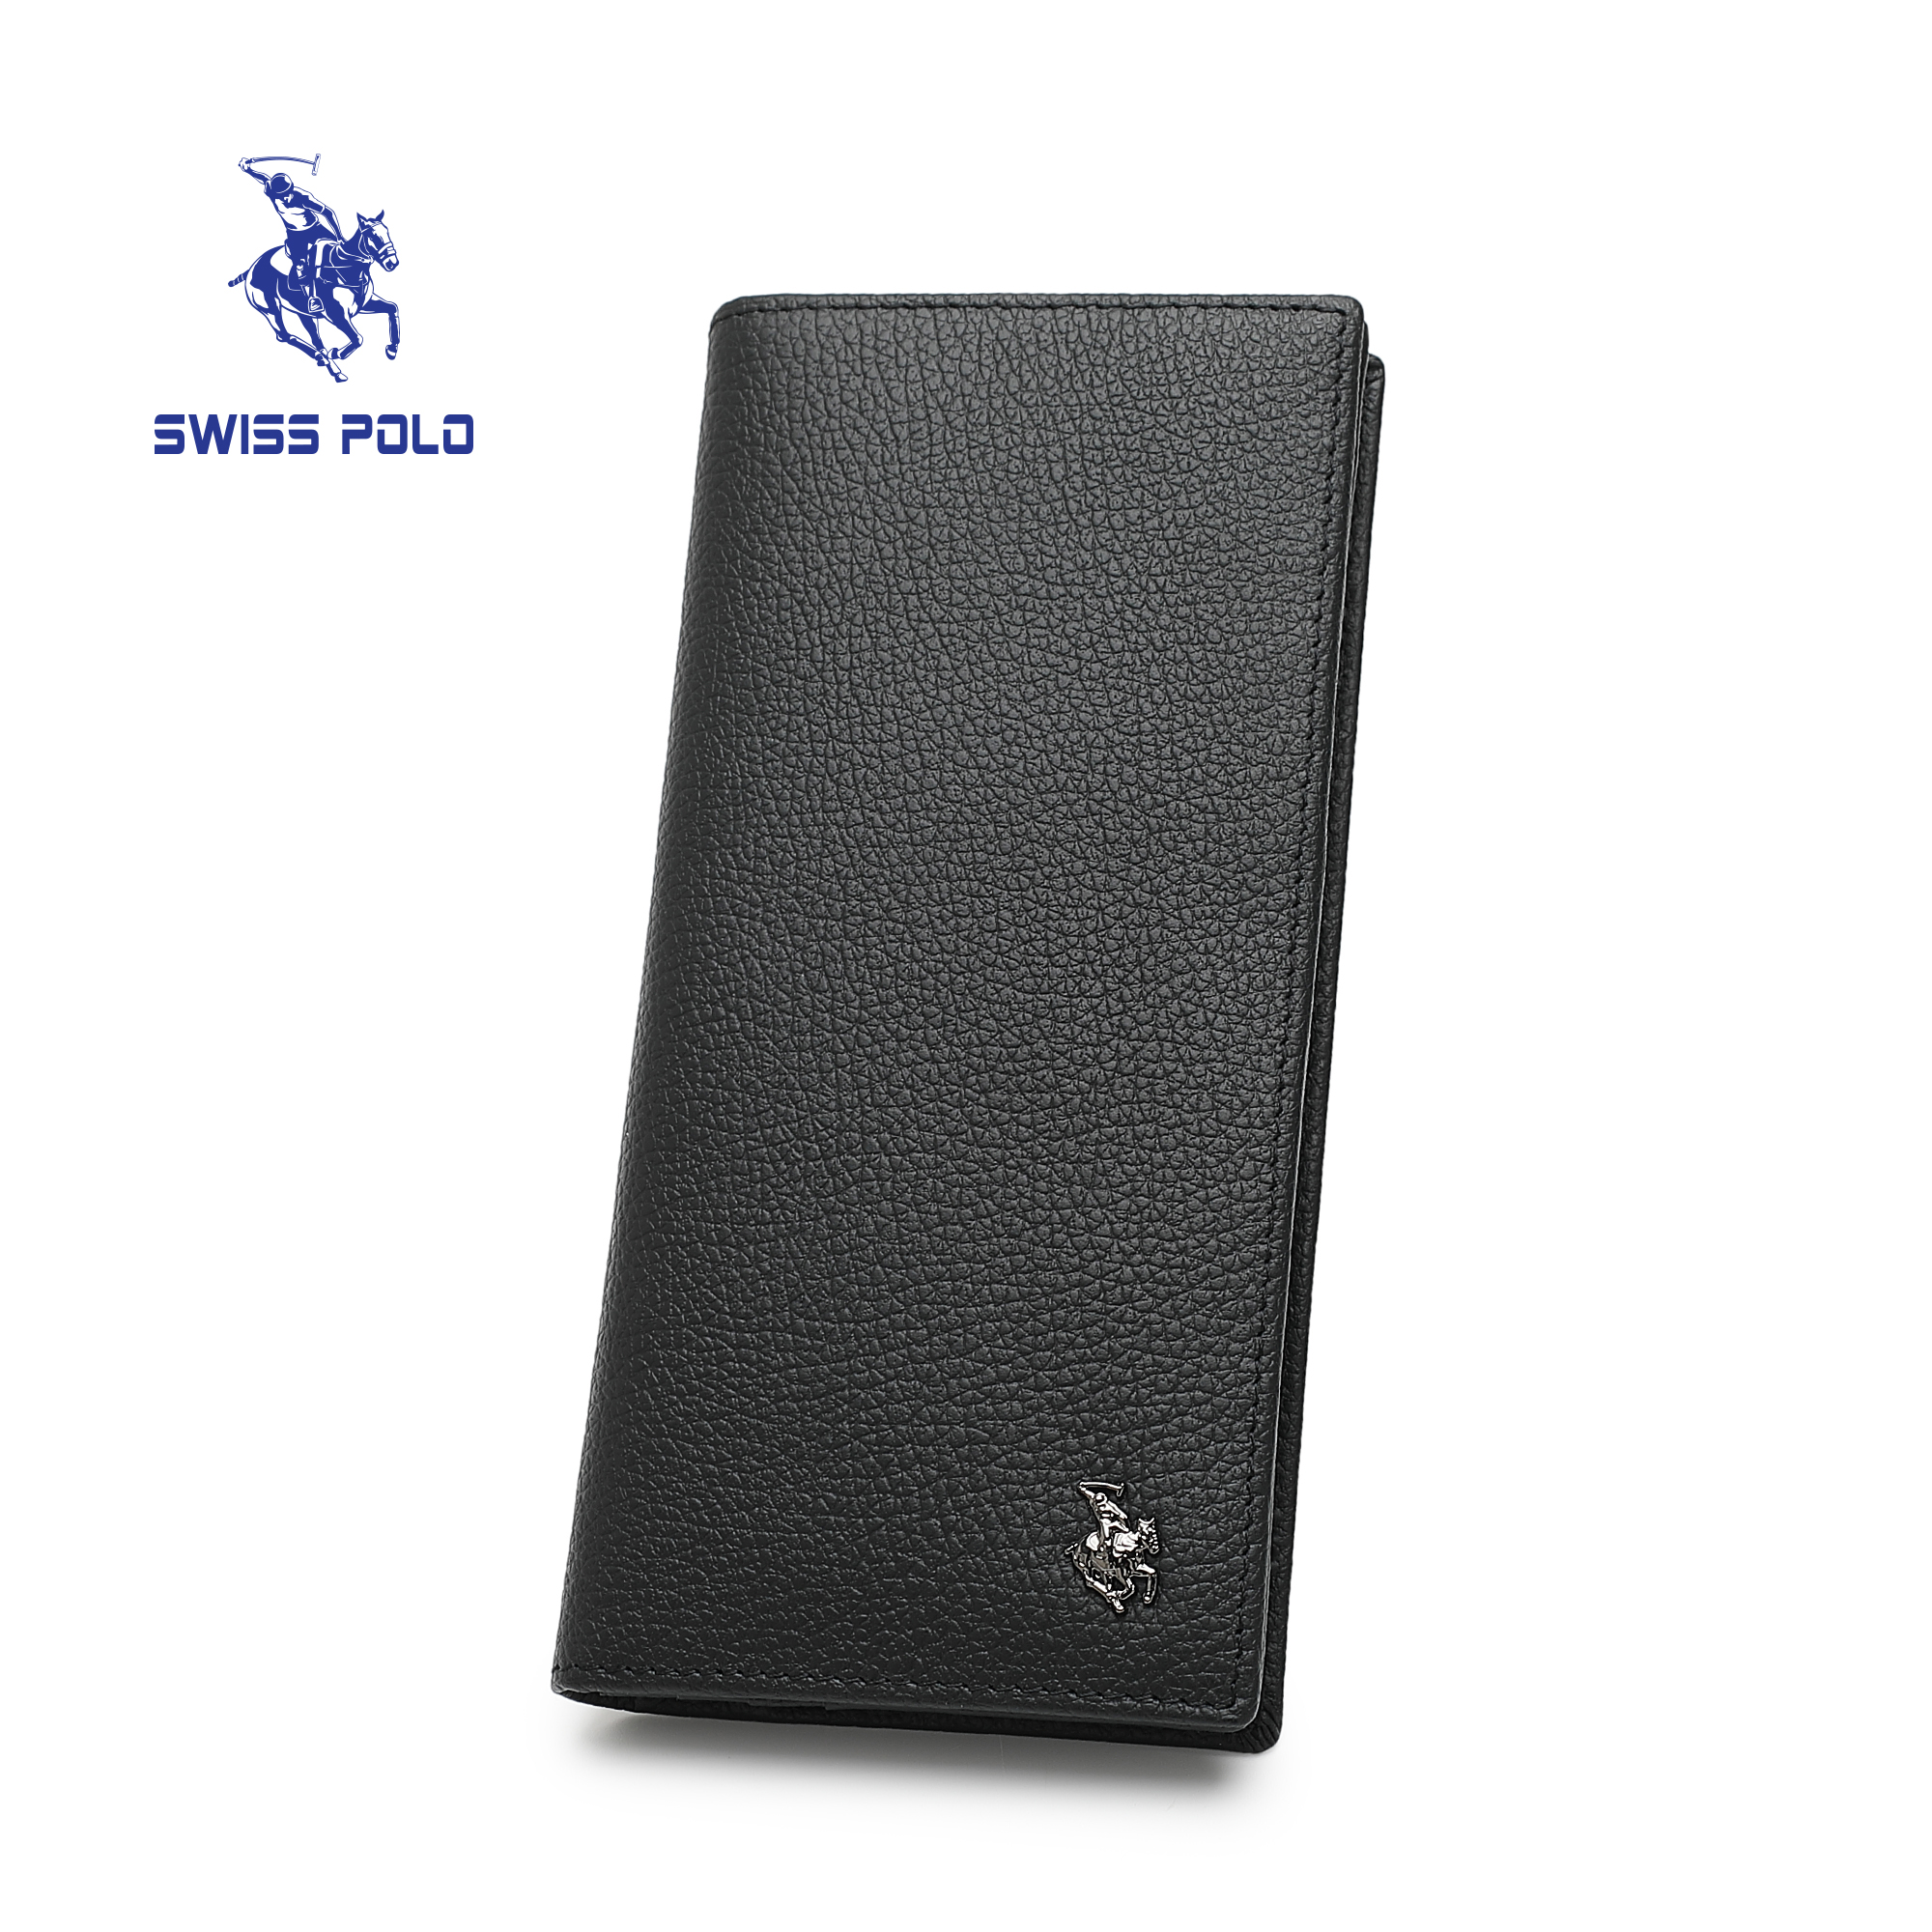 SWISS POLO Genuine Leather RFID Long Wallet SW 182-1 BLACK